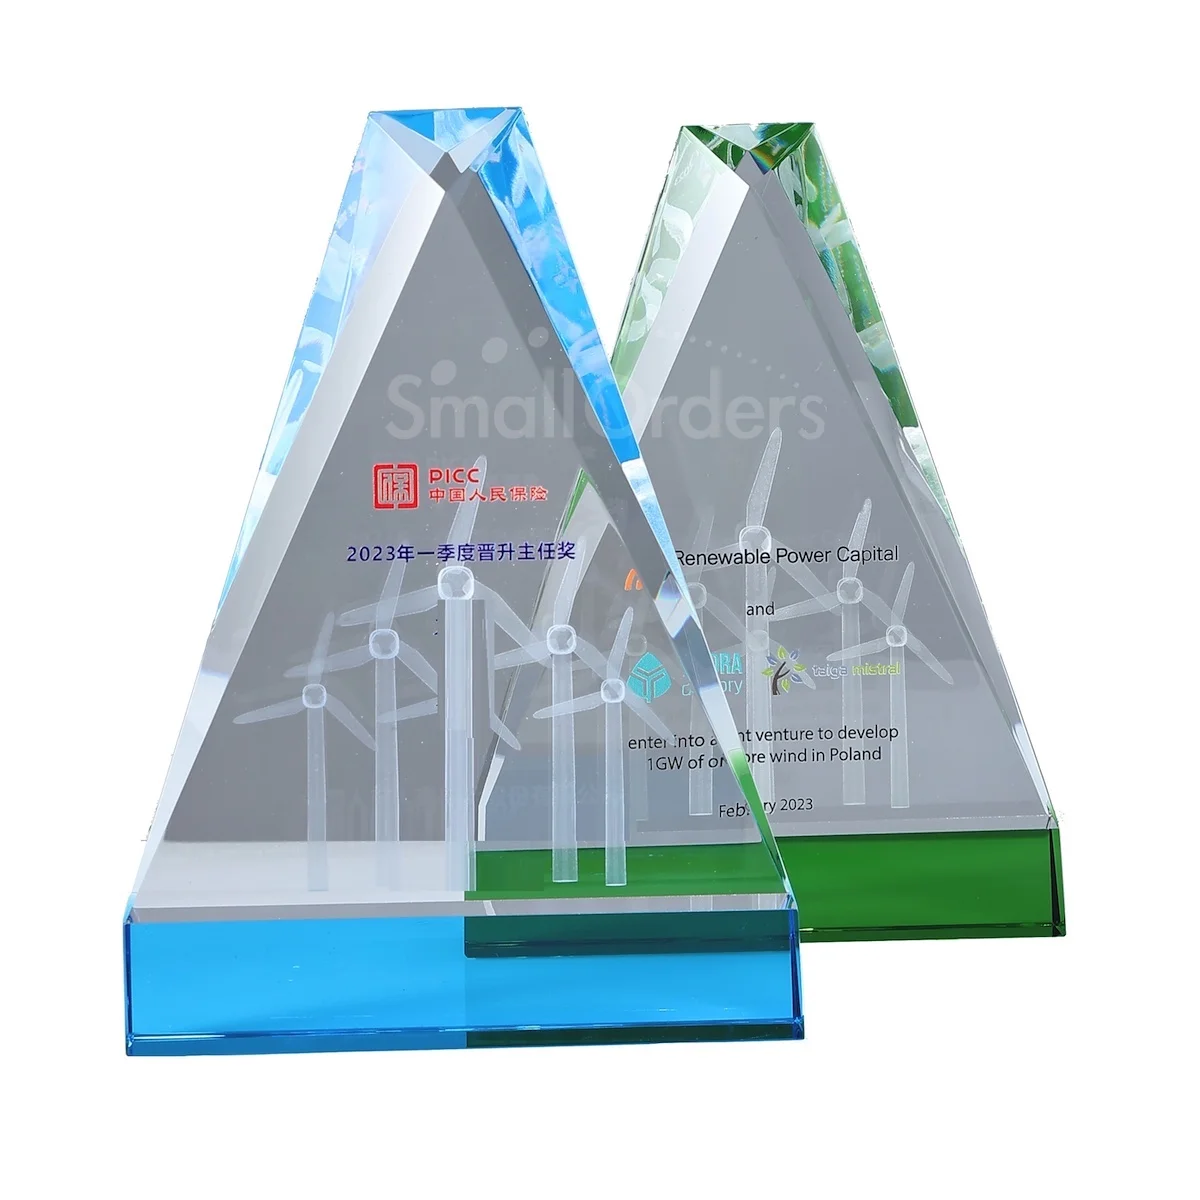 Hot selling unique custom sublimation blank logo print trophies  custom sport trofeos corporate advertising award crystal trophy